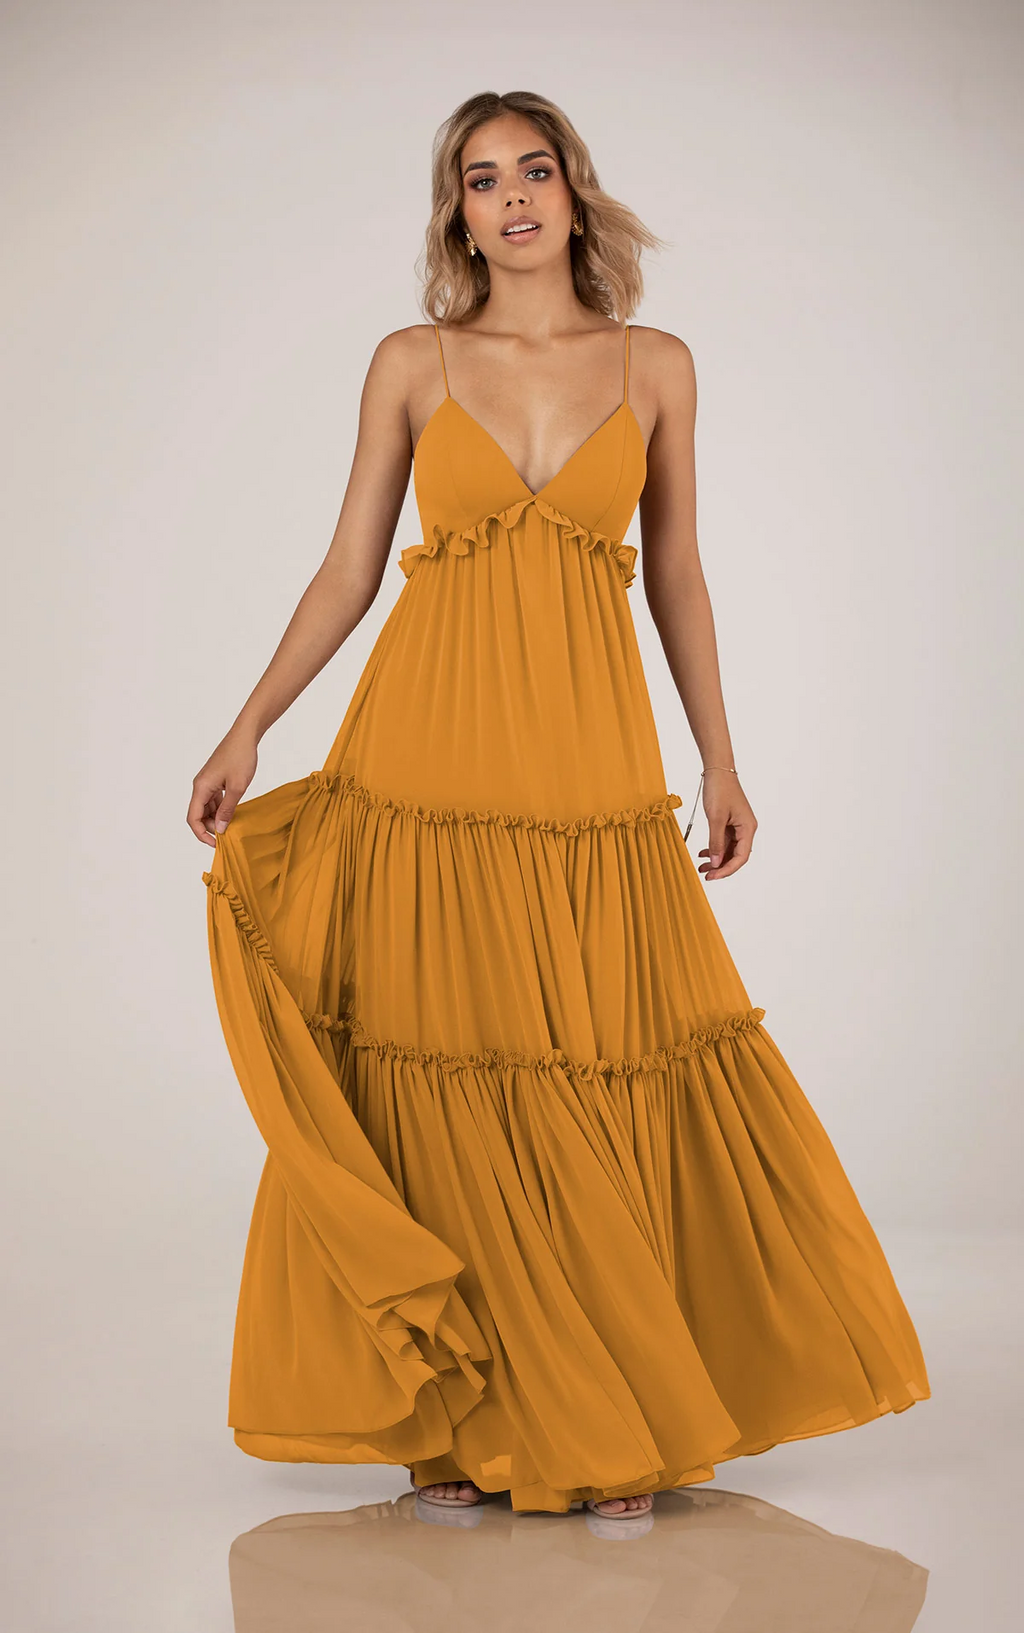 Sorella Vita Dress Style 9508  (Harvest Gold-Size 10) Prom, Ball., Black-tie, Bridesmaid, Pageant (Copy) (Copy)